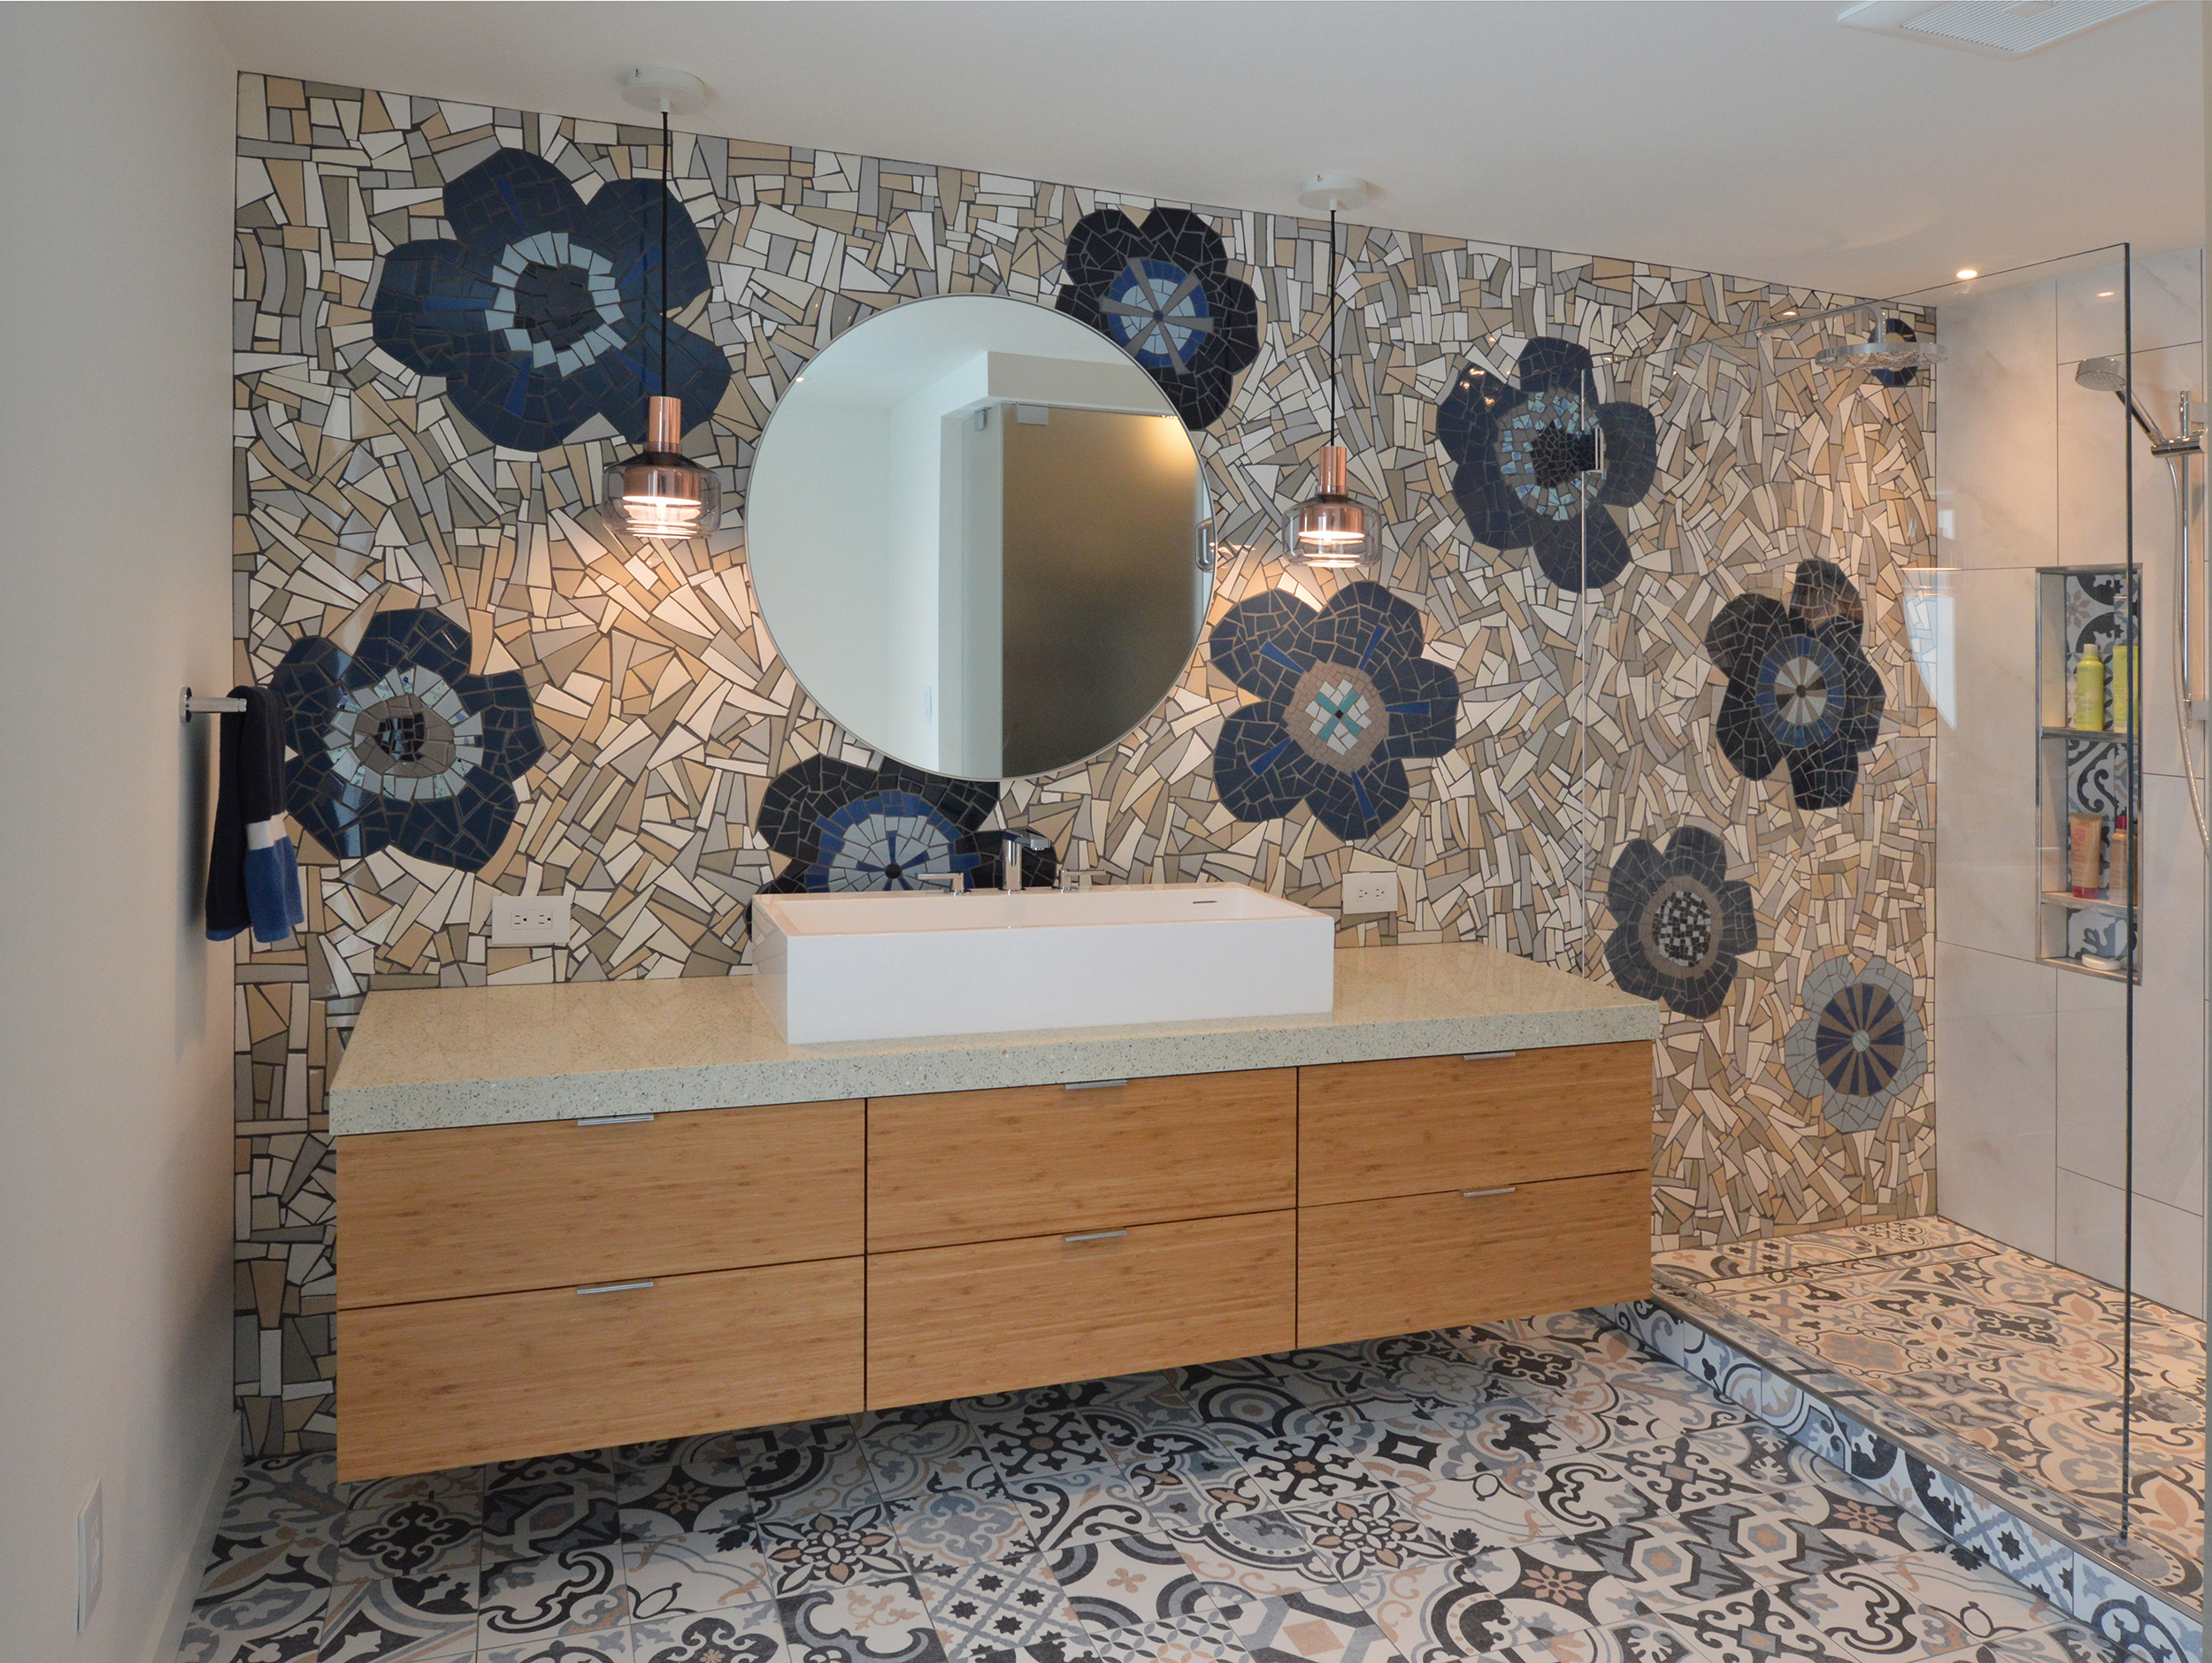 expansive mosaic tile work in bathroom